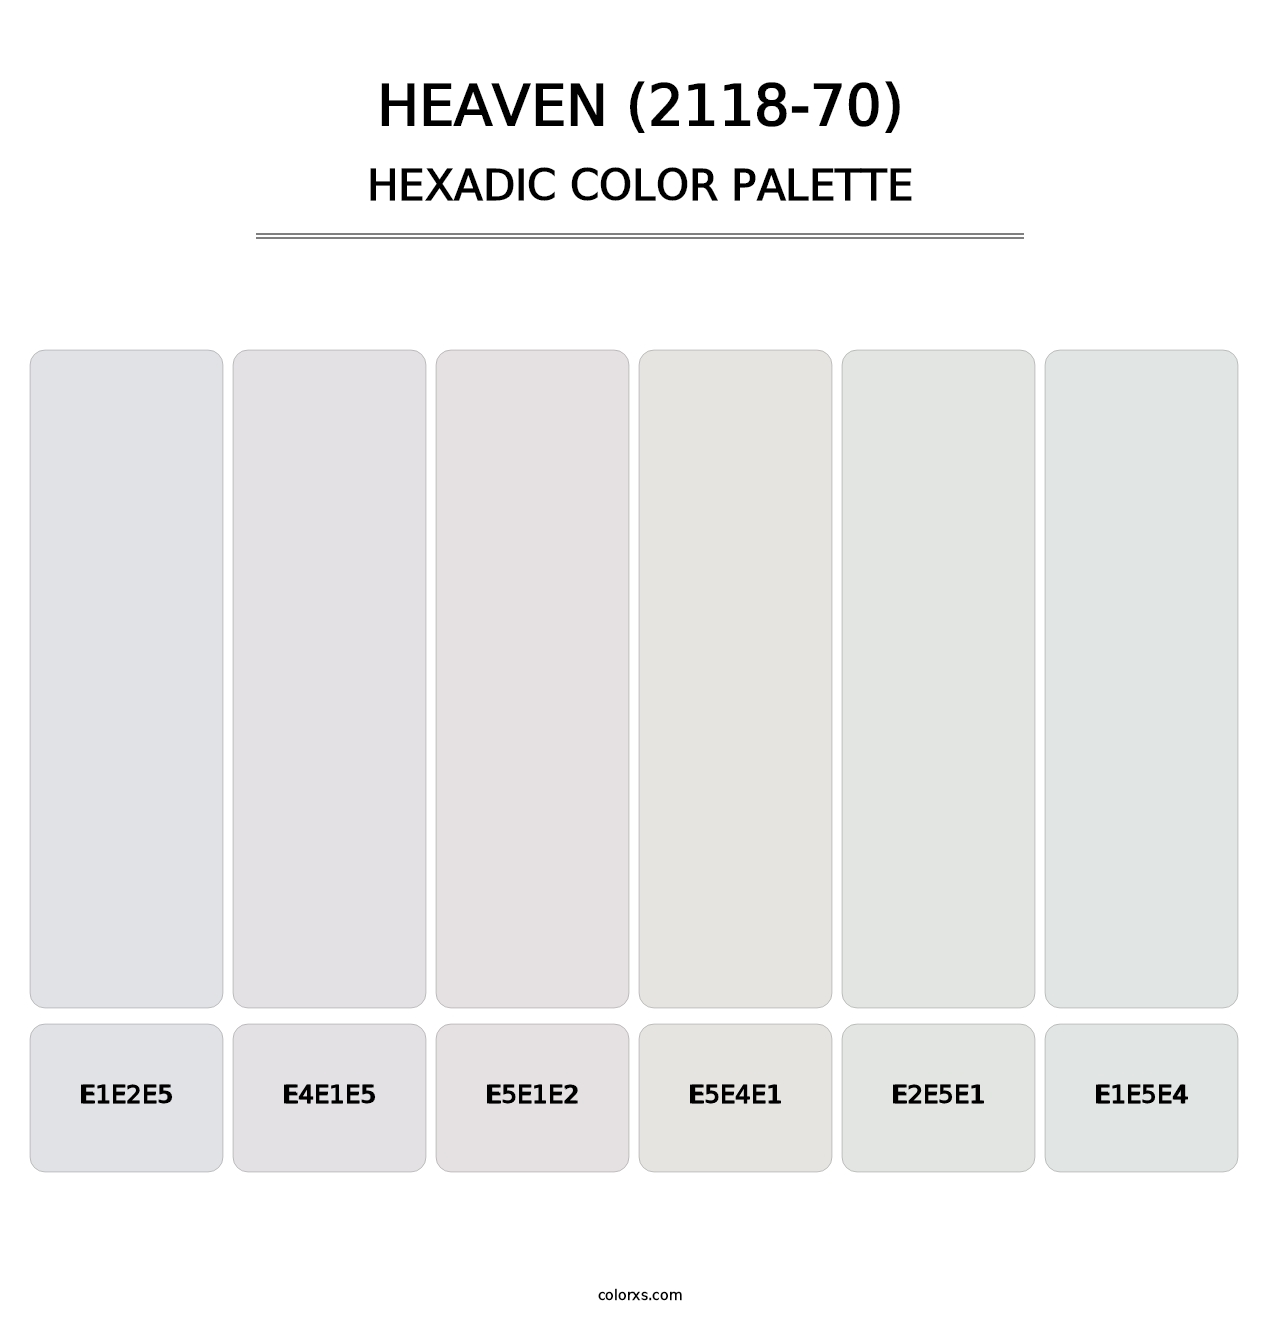 Heaven (2118-70) - Hexadic Color Palette